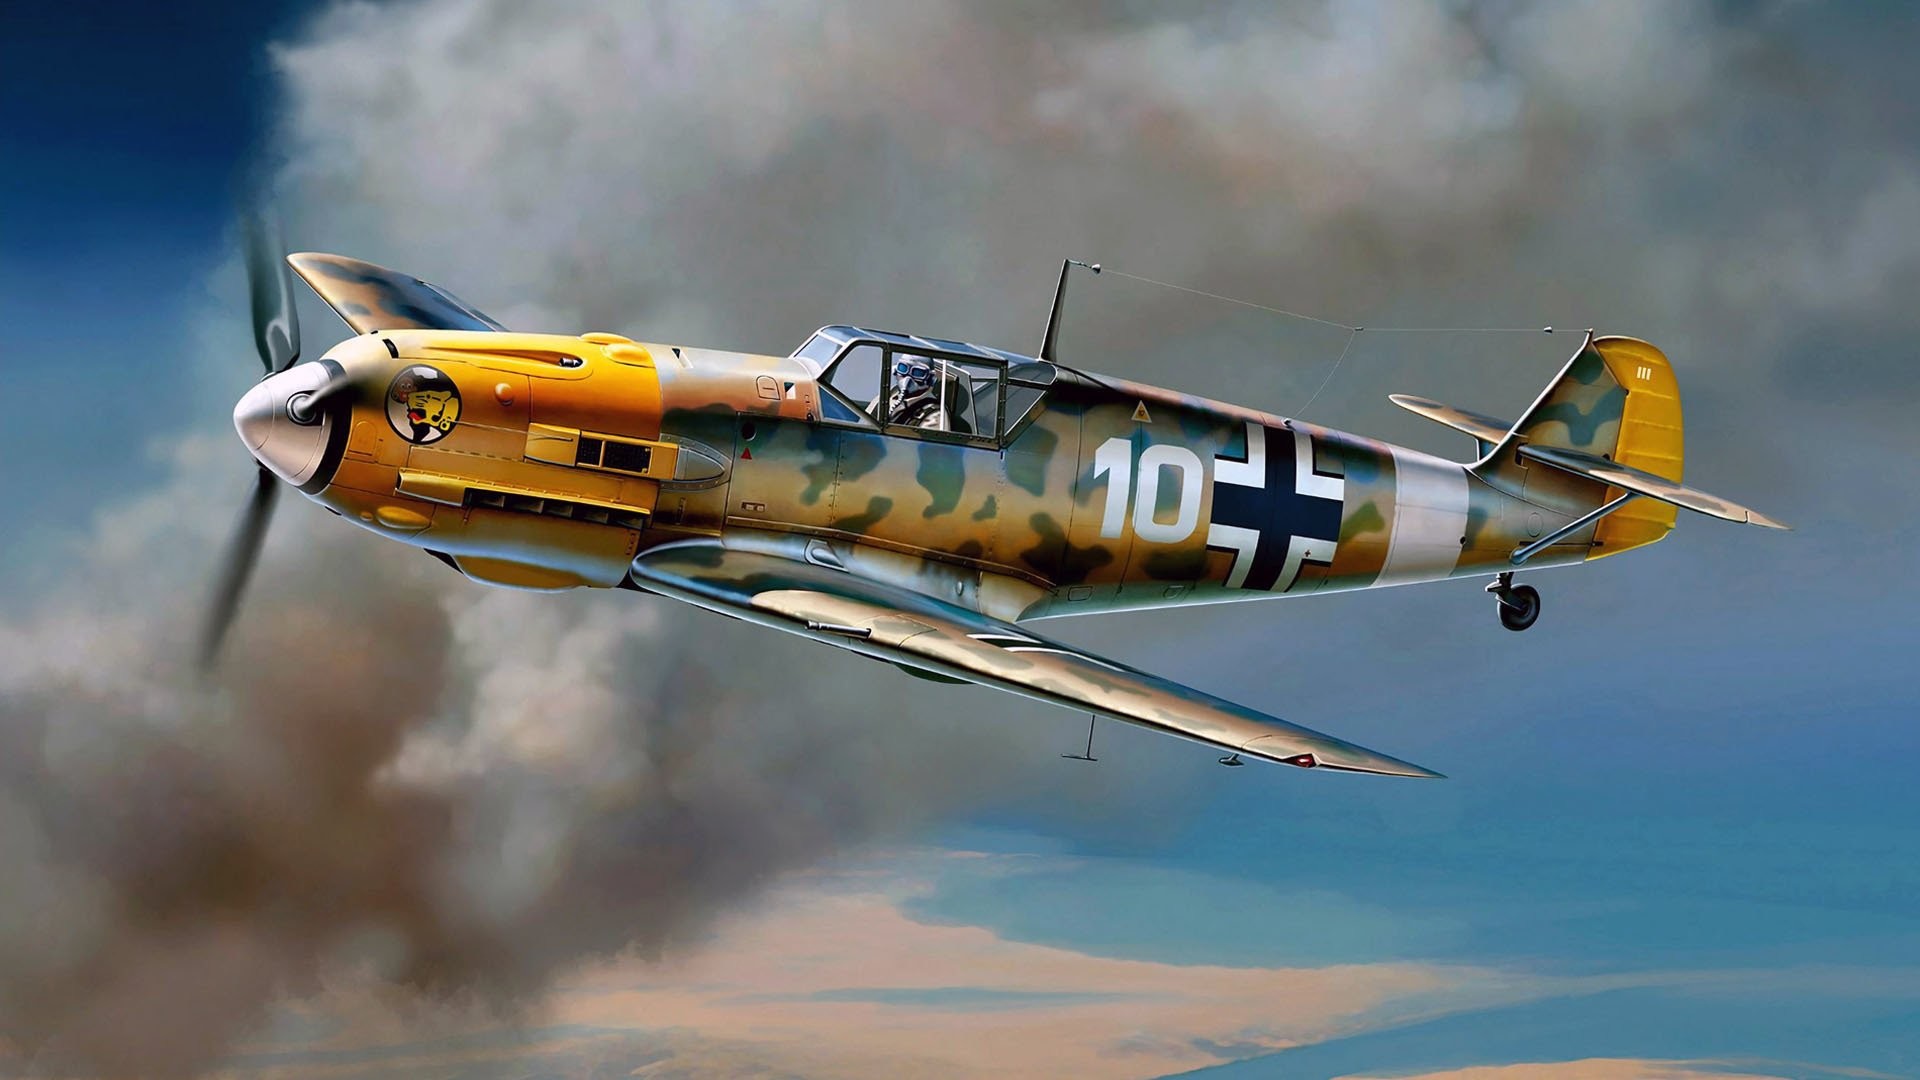 Messerschmitt Bf 109 Wallpapers 79 Pictures Images, Photos, Reviews